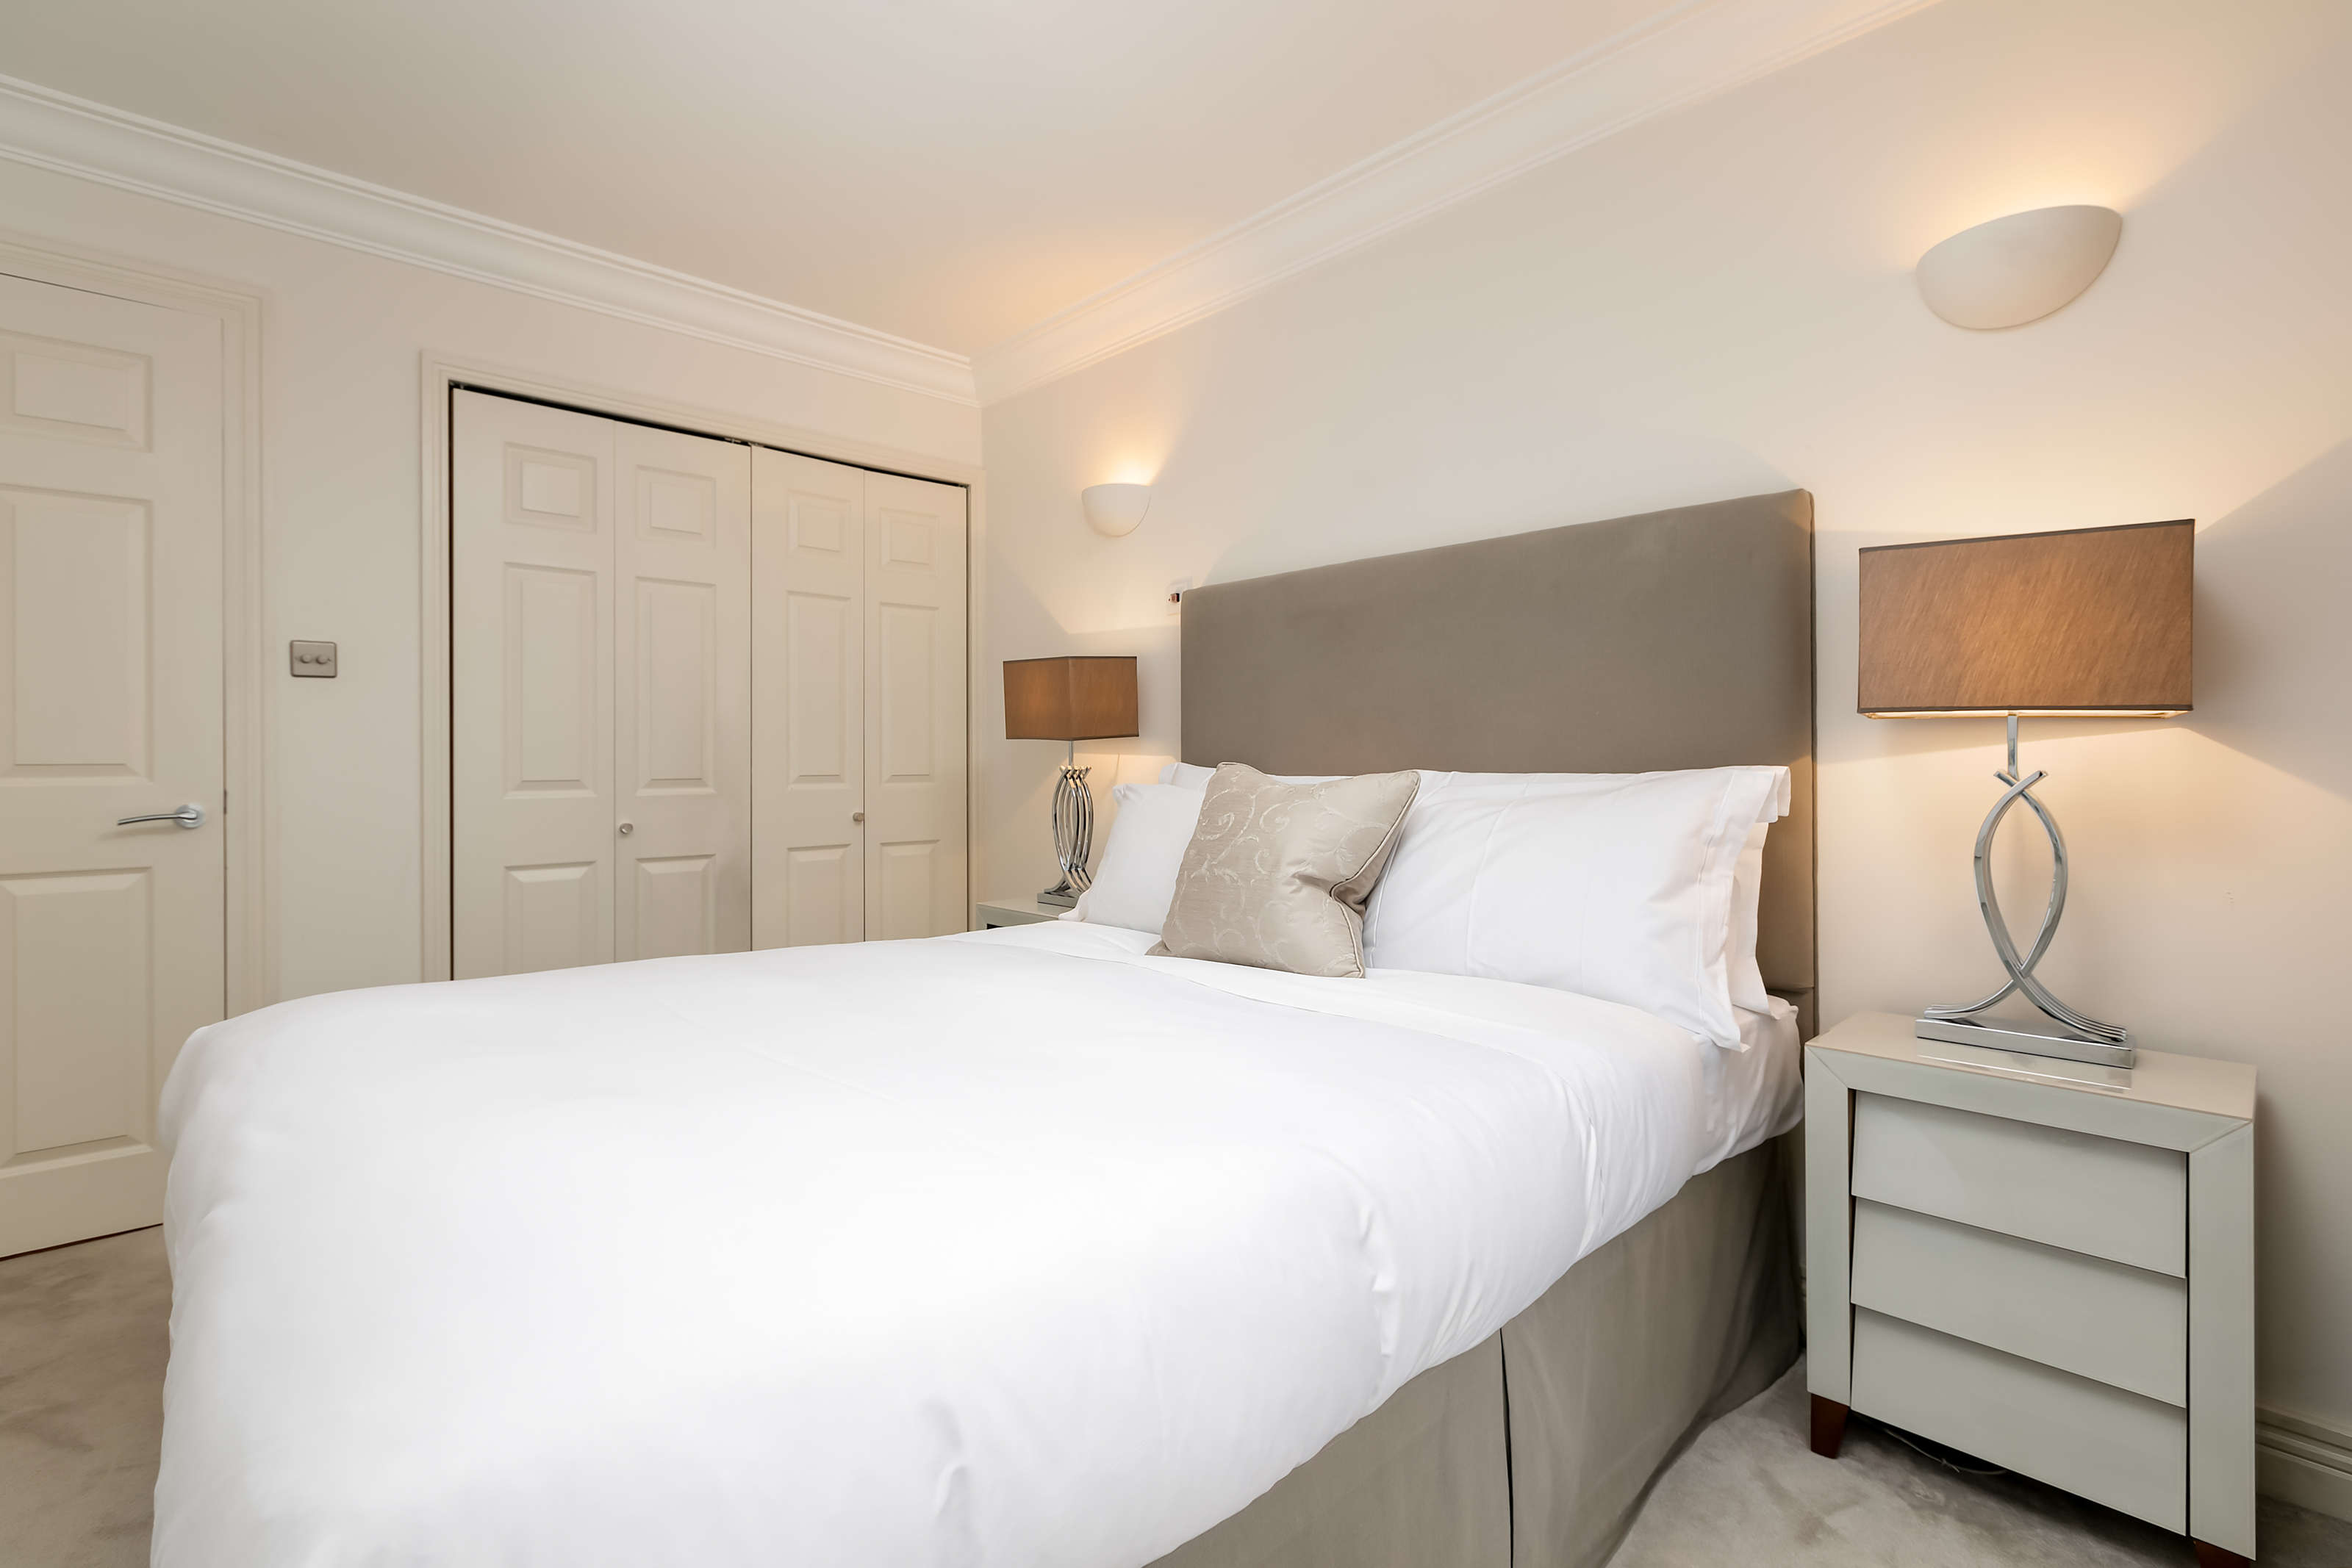 Lovelydays luxury service apartment rental - London - Covent Garden - Crown Court - Lovelysuite - 1 bedrooms - 1 bathrooms - Double bed - short term apartment in london - af2fed8d7dd4 - Lovelydays